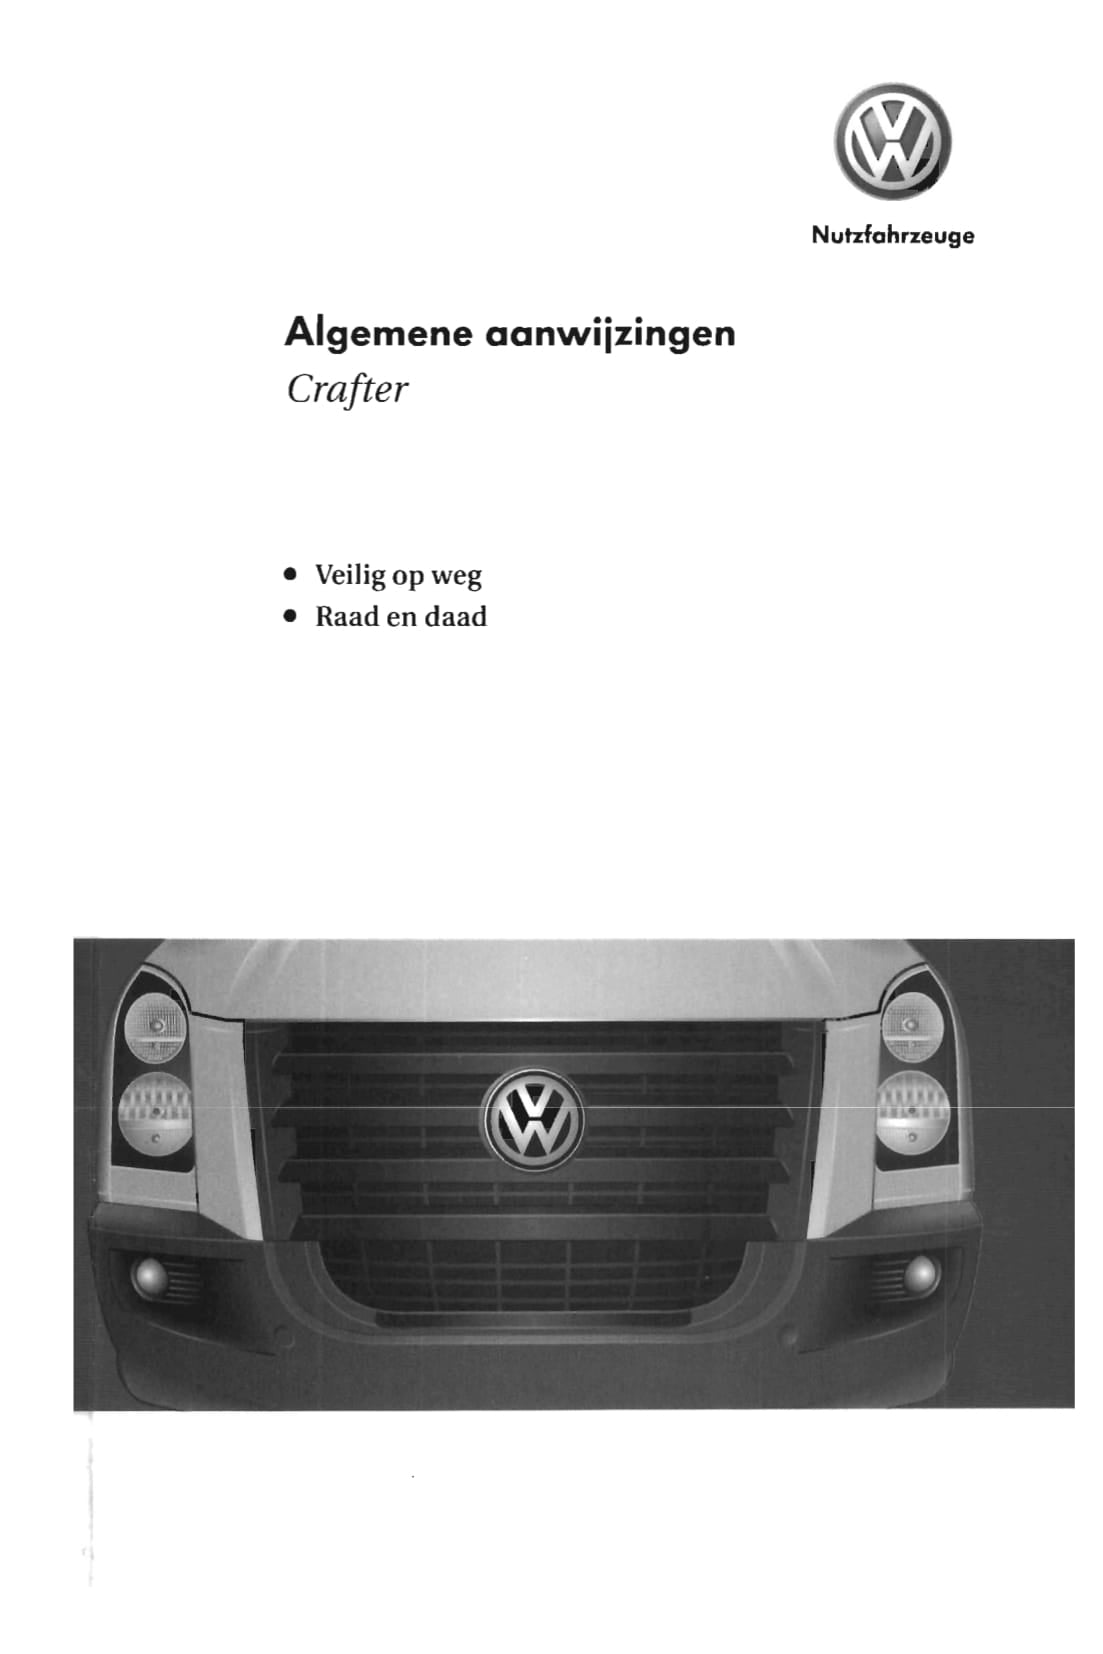 2006-2011 Volkswagen Crafter Manuel du propriétaire | Néerlandais